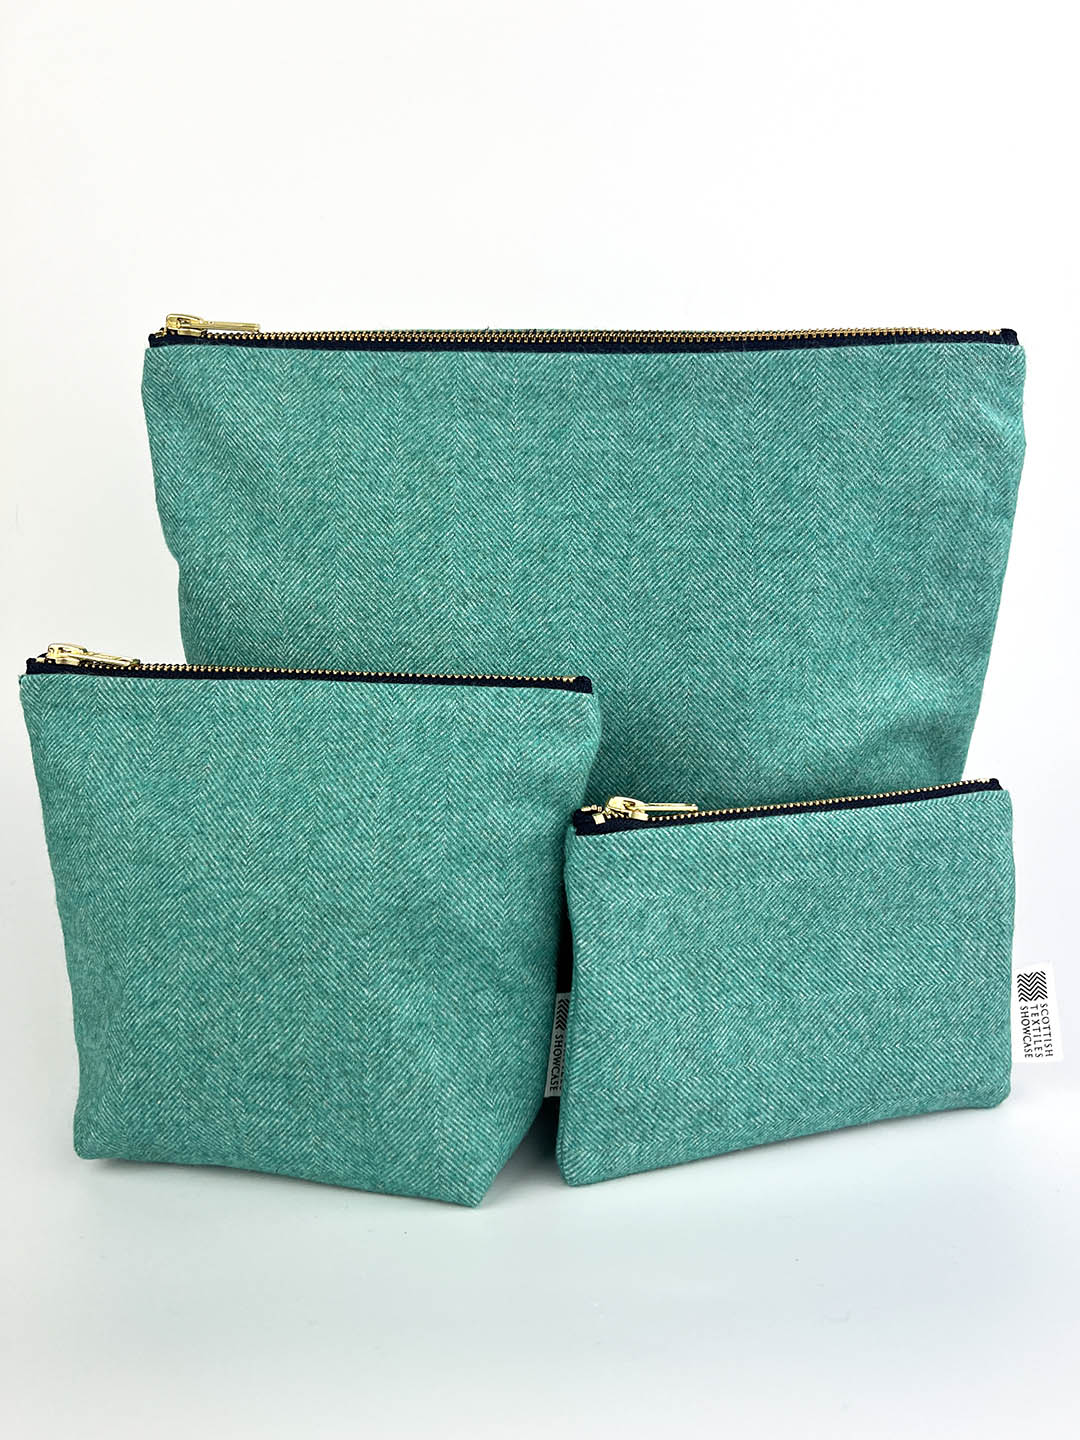 Popular multi purpose jade wool bag perfect for organising your everyday essentials. Scottish textiles showcase